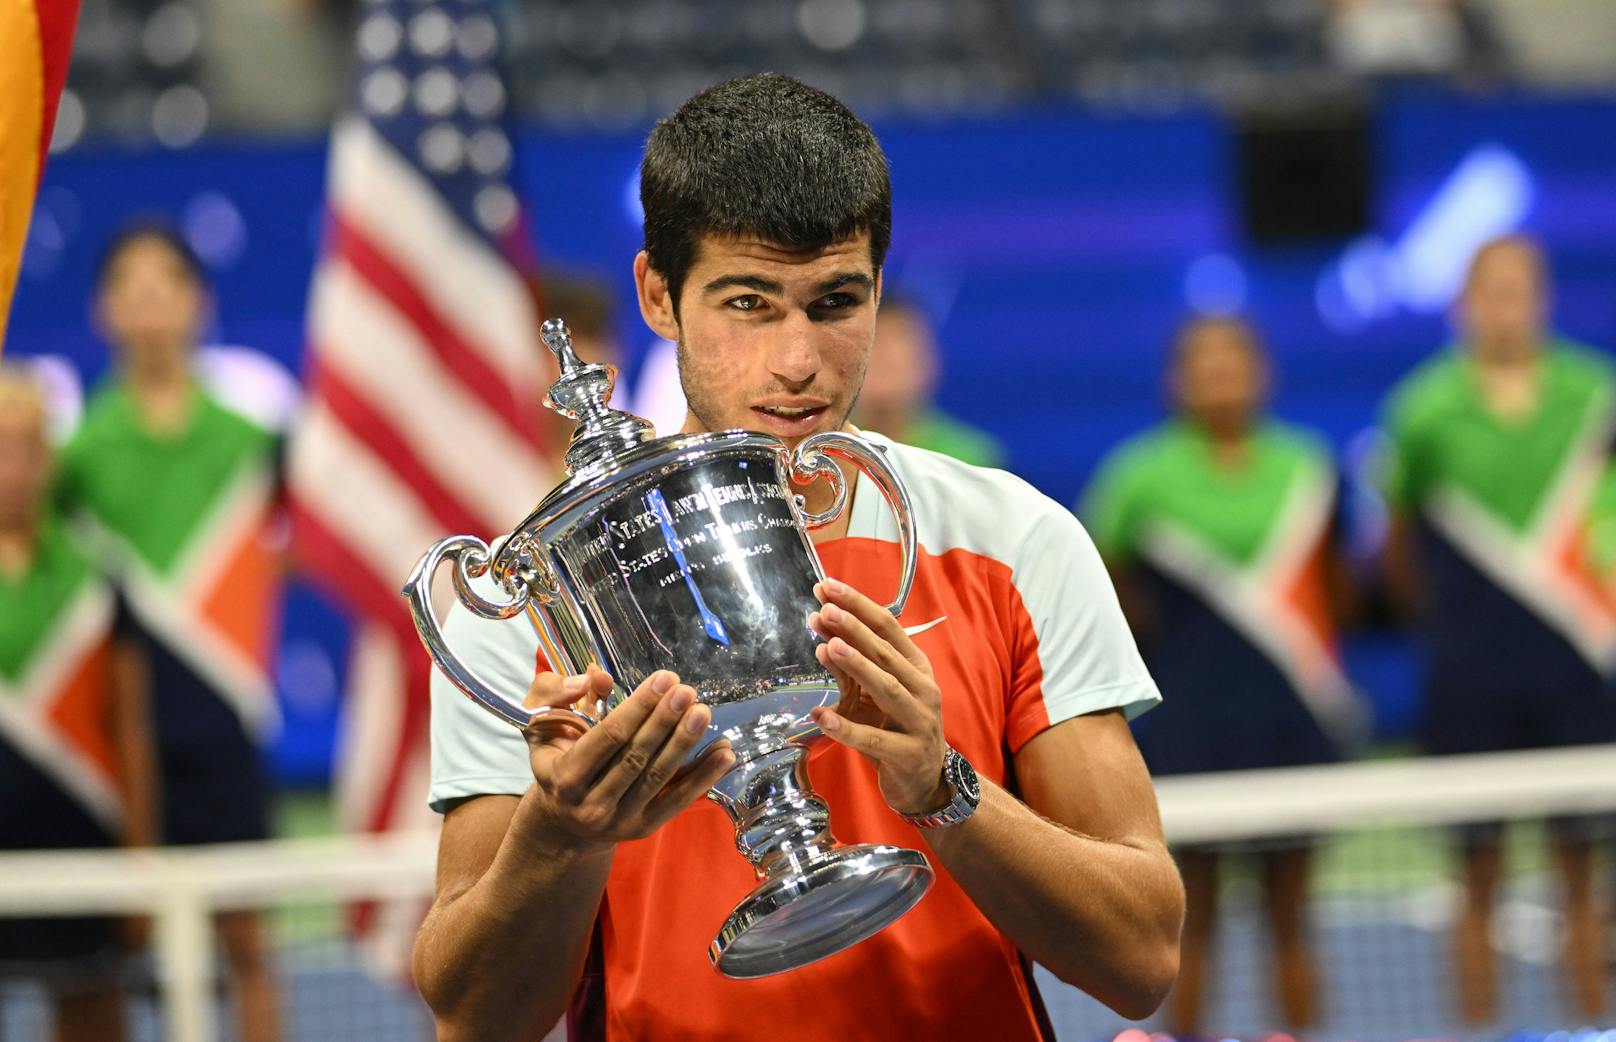 Alcaraz gewinnt US Open, ist jüngste Nummer 1